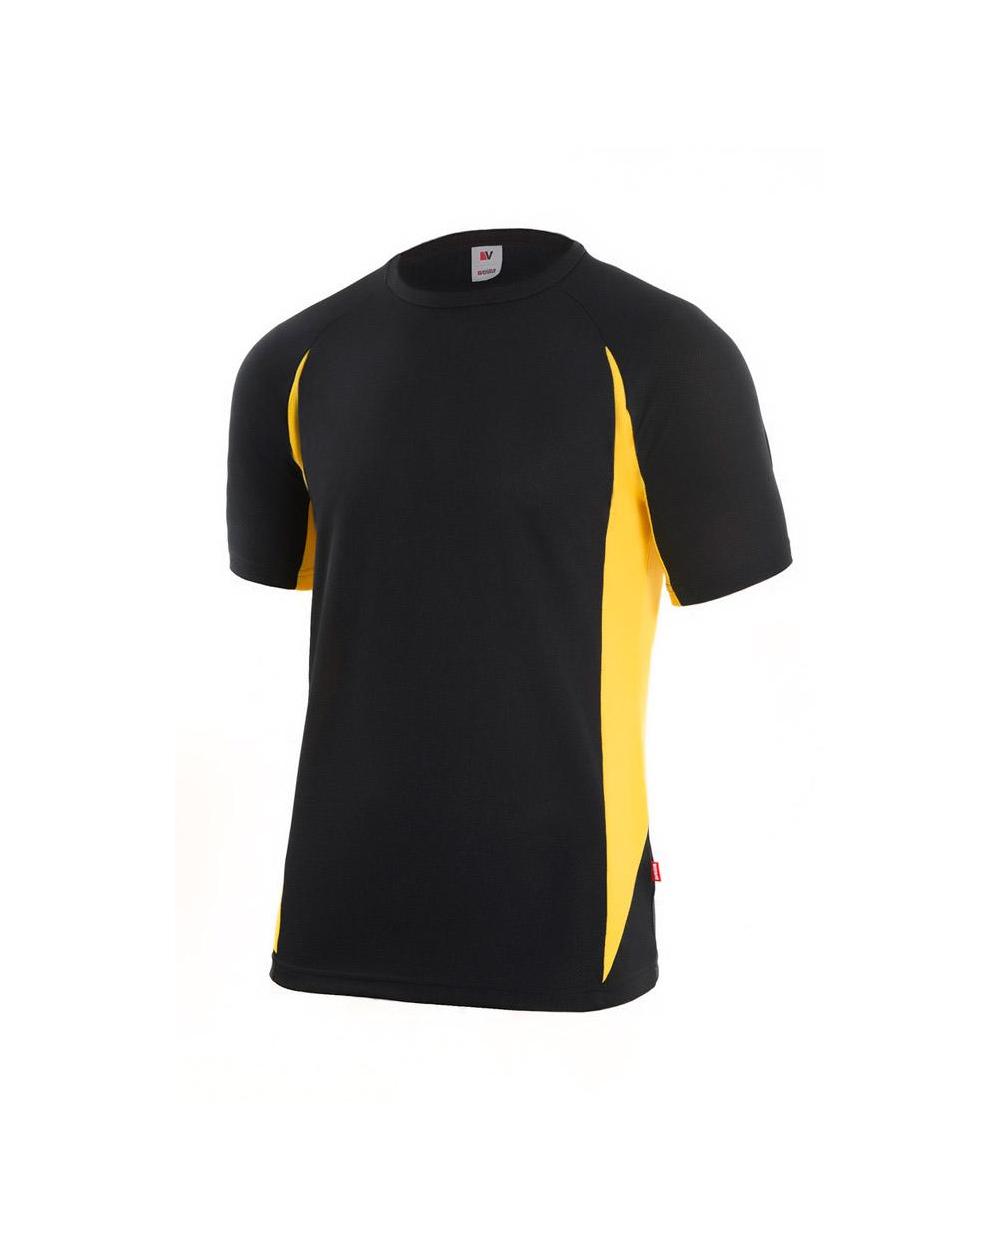 Comprar Camiseta tecnica bicolor serie 105501 online barato Negro/Amarillo